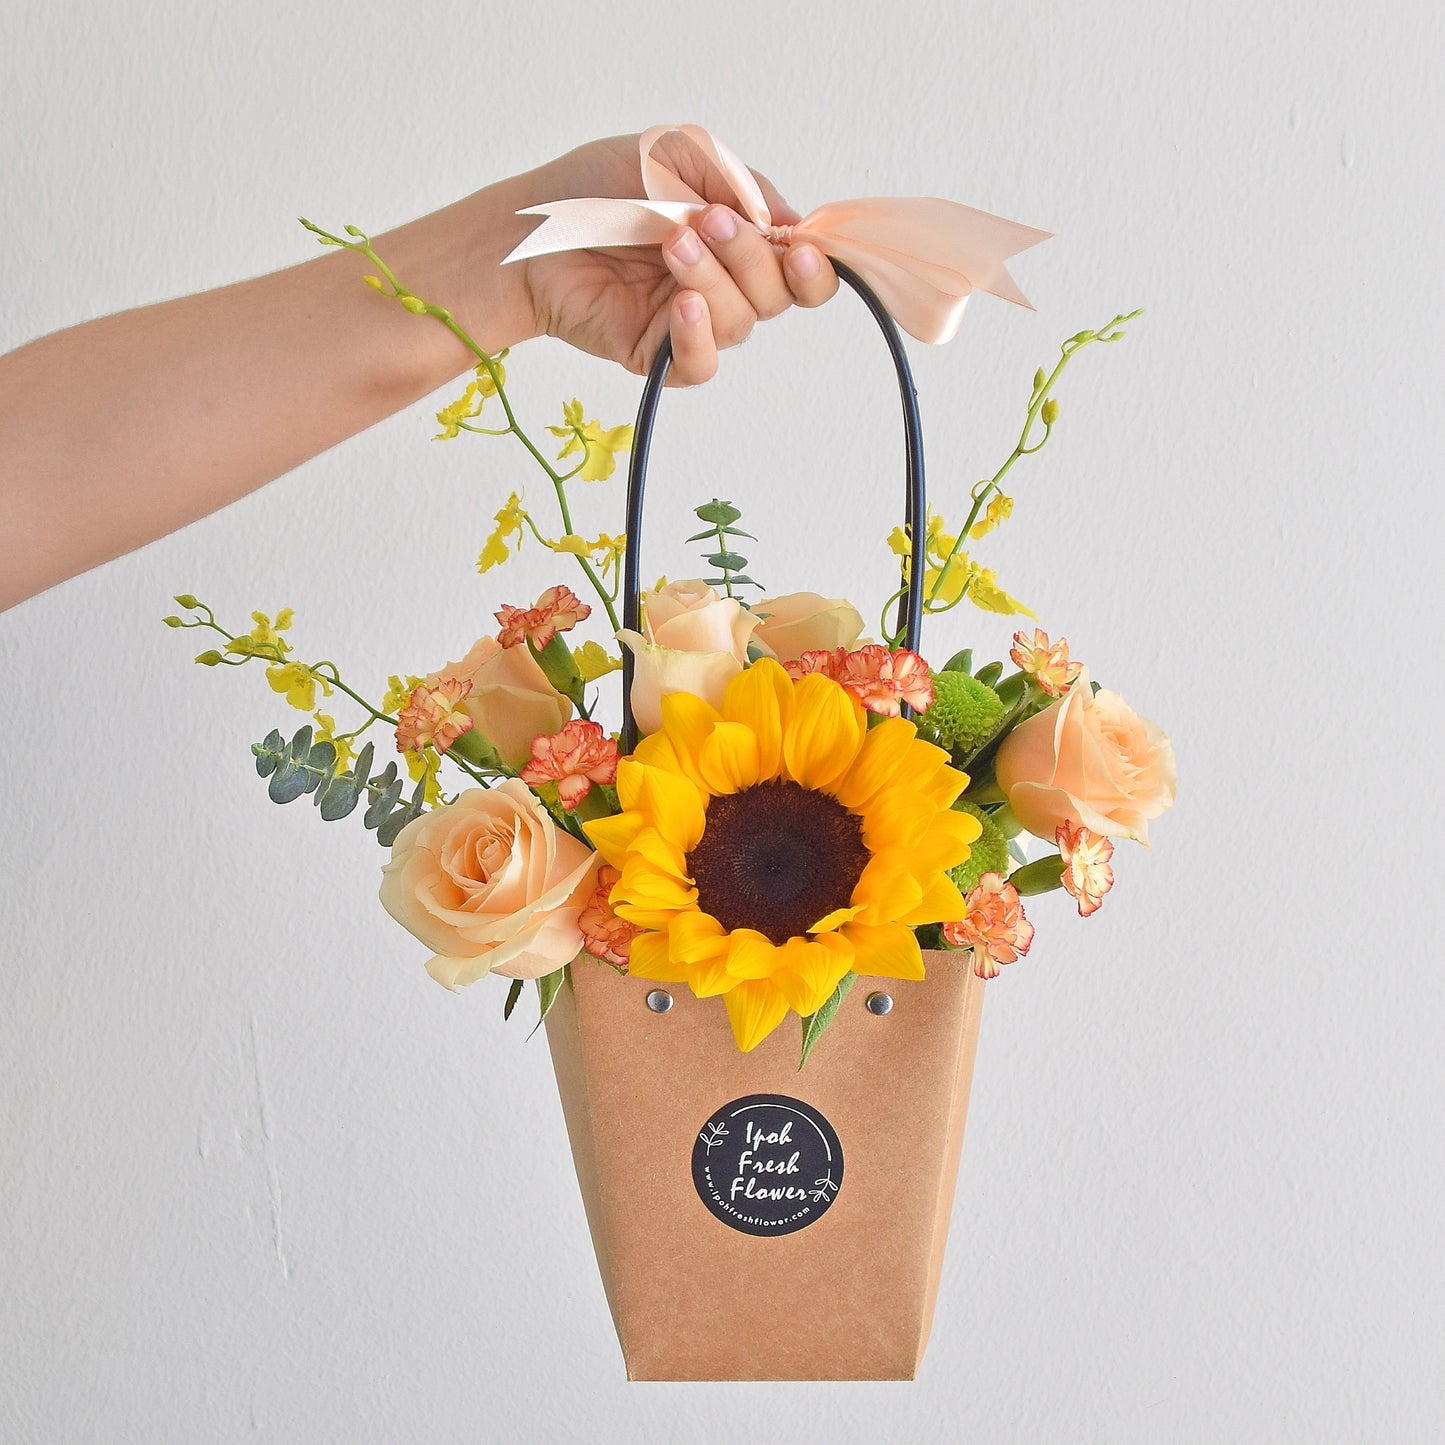 Peachy sunshine |Fresh Flower Basket Delivery